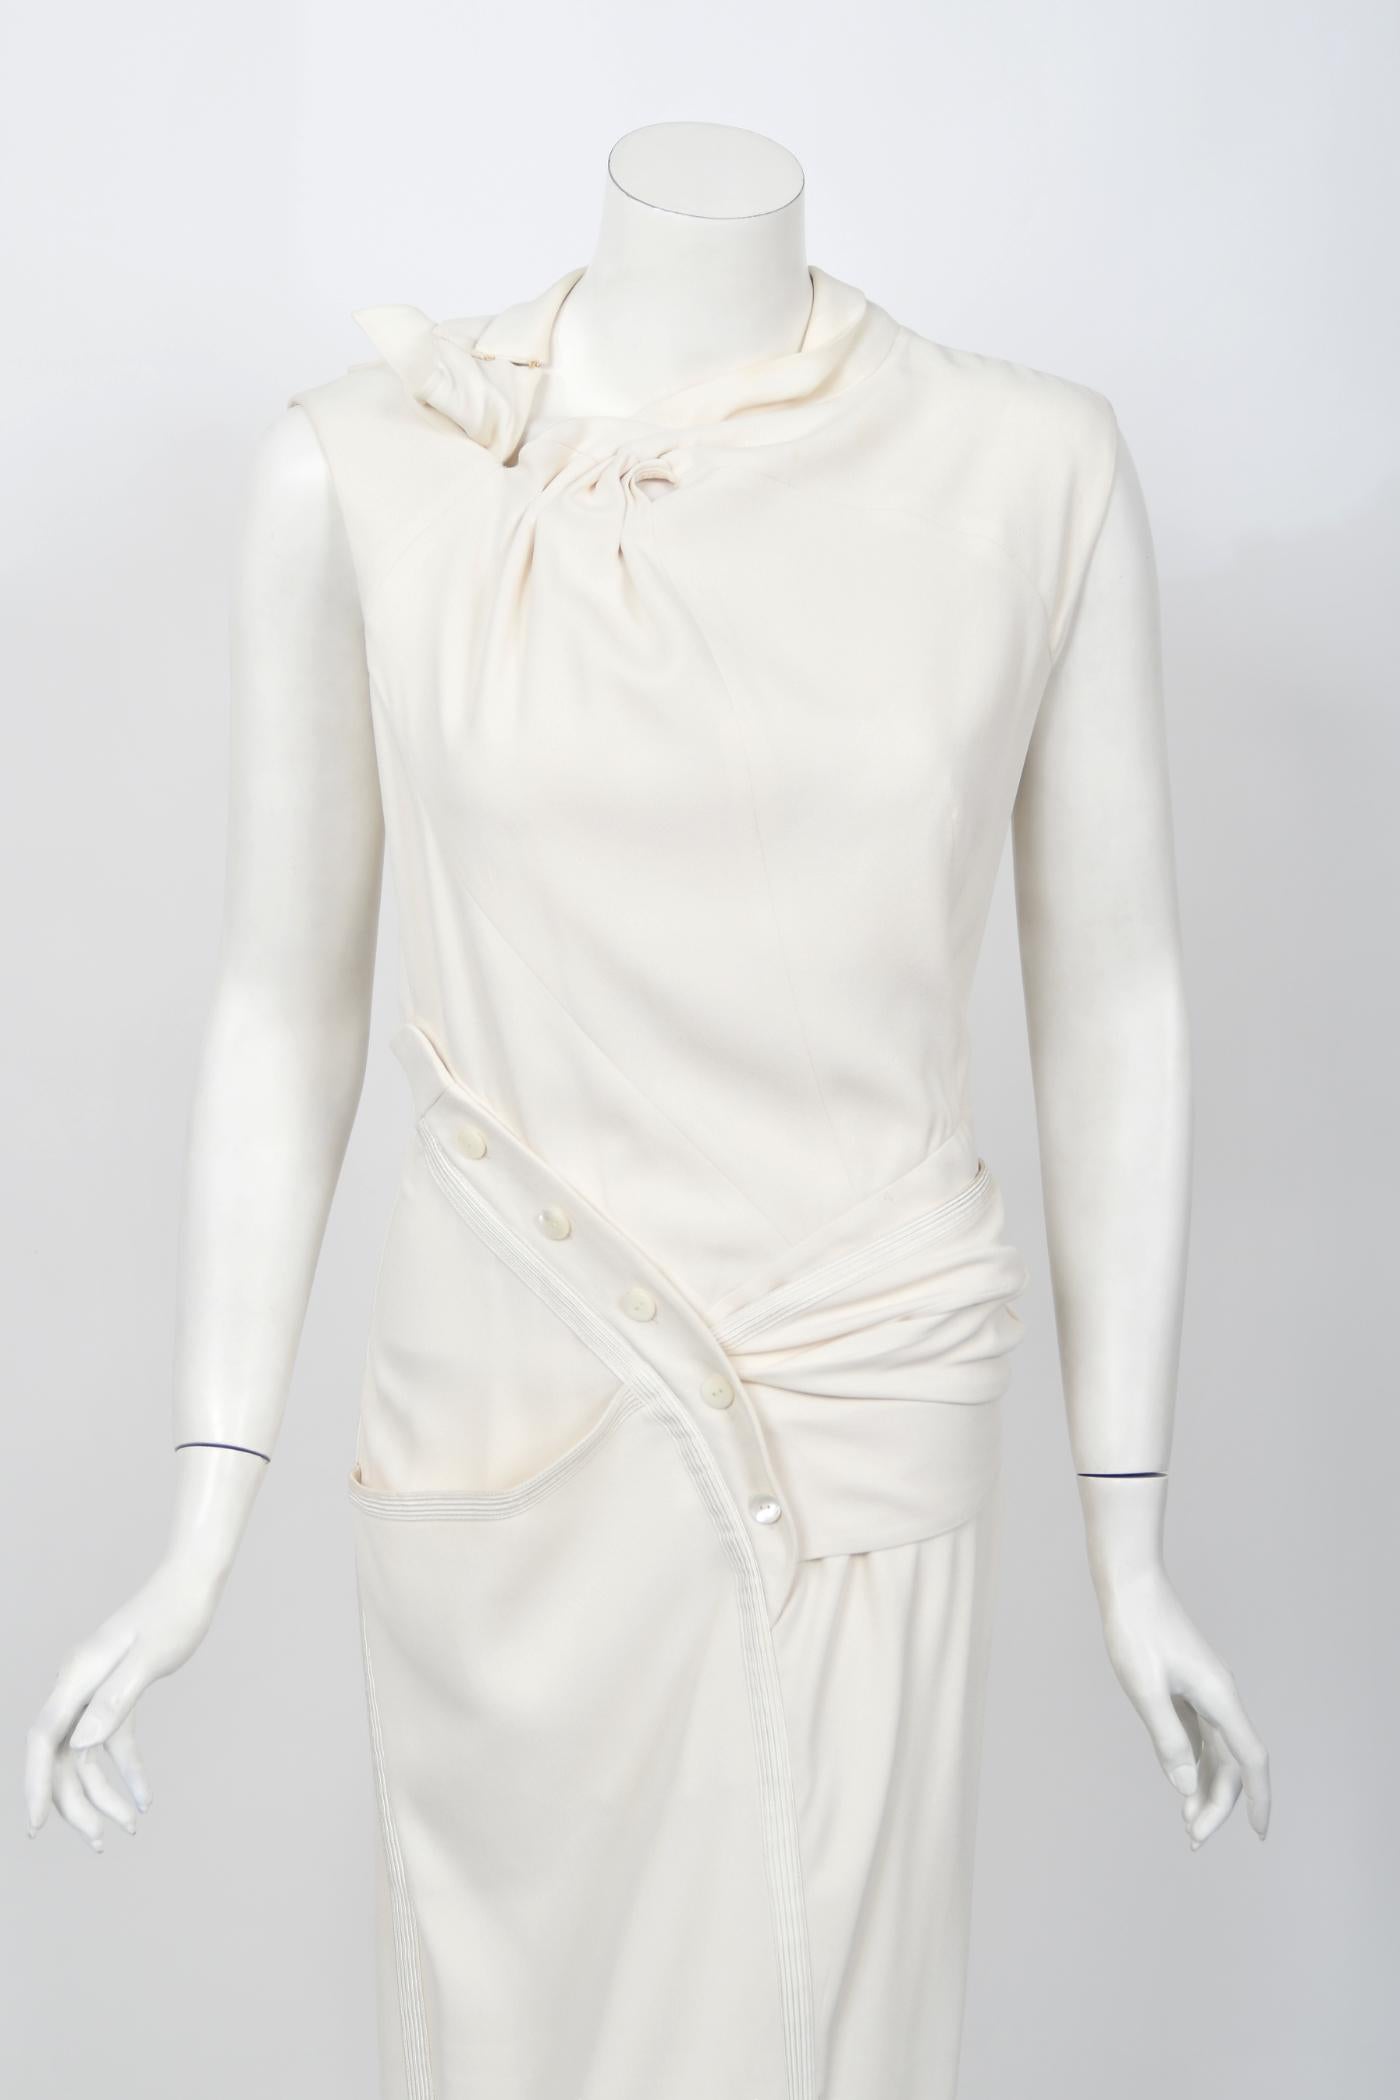 2000 Christian Dior by John Galliano Ivory Crepe Cut-Out Asymmetric Draped Dress 2